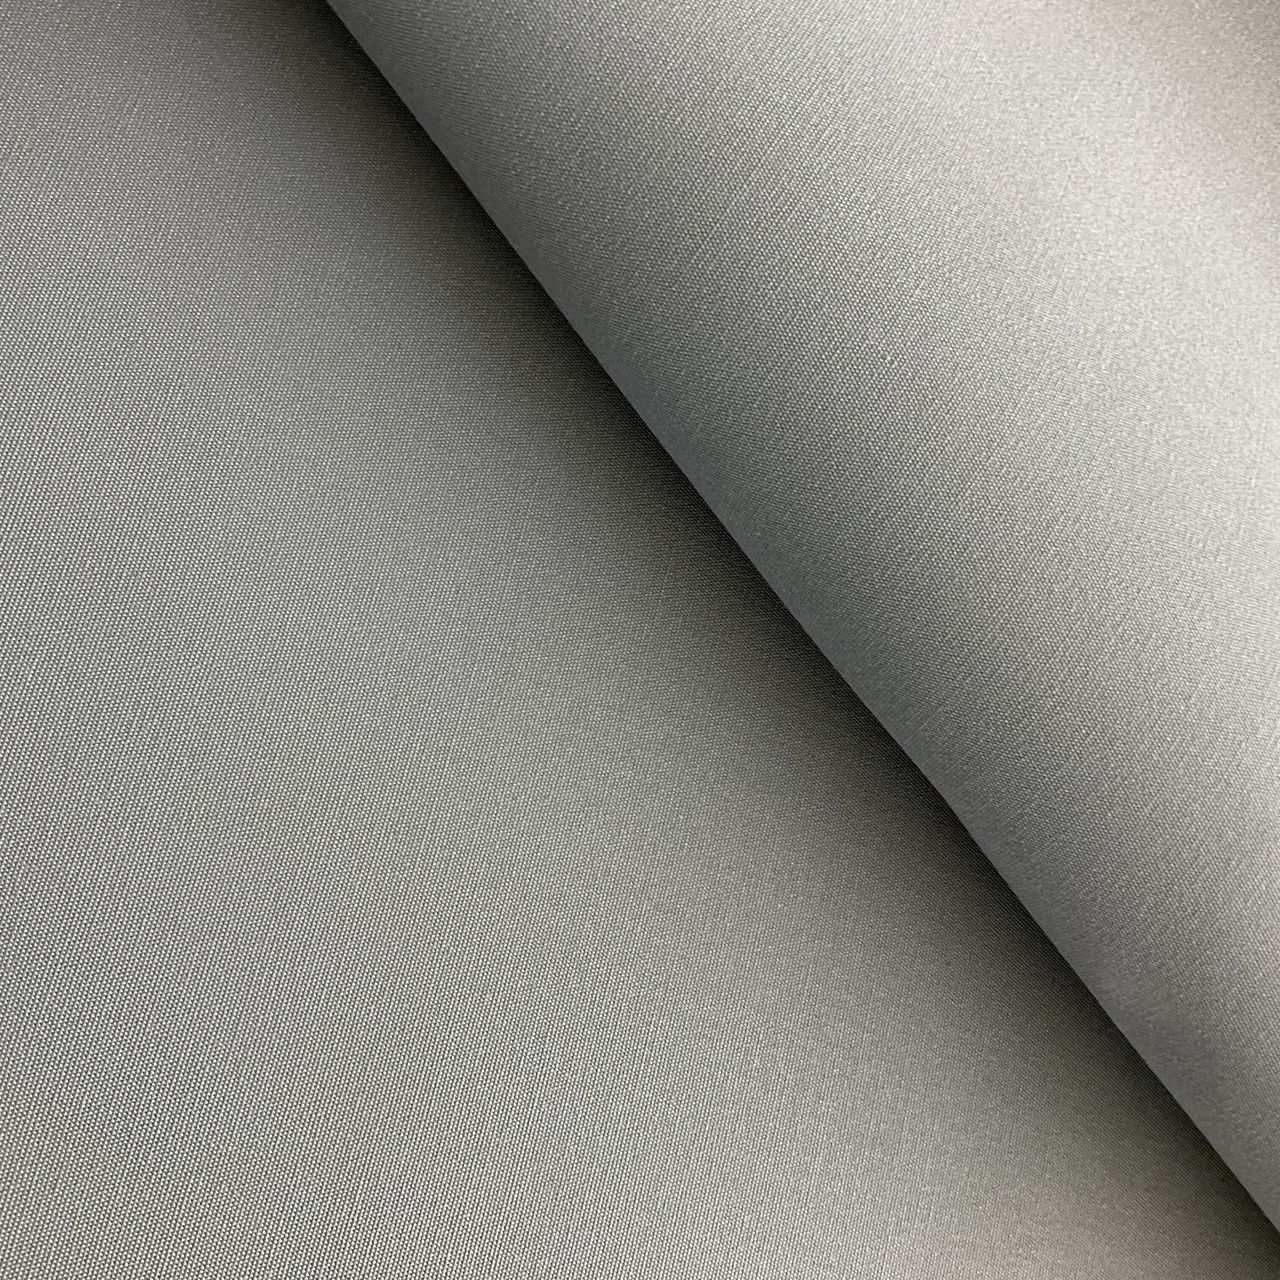 Canvas Waterproof PU Solution Fabric 60 Wide $9.99/Yard UV Resistant